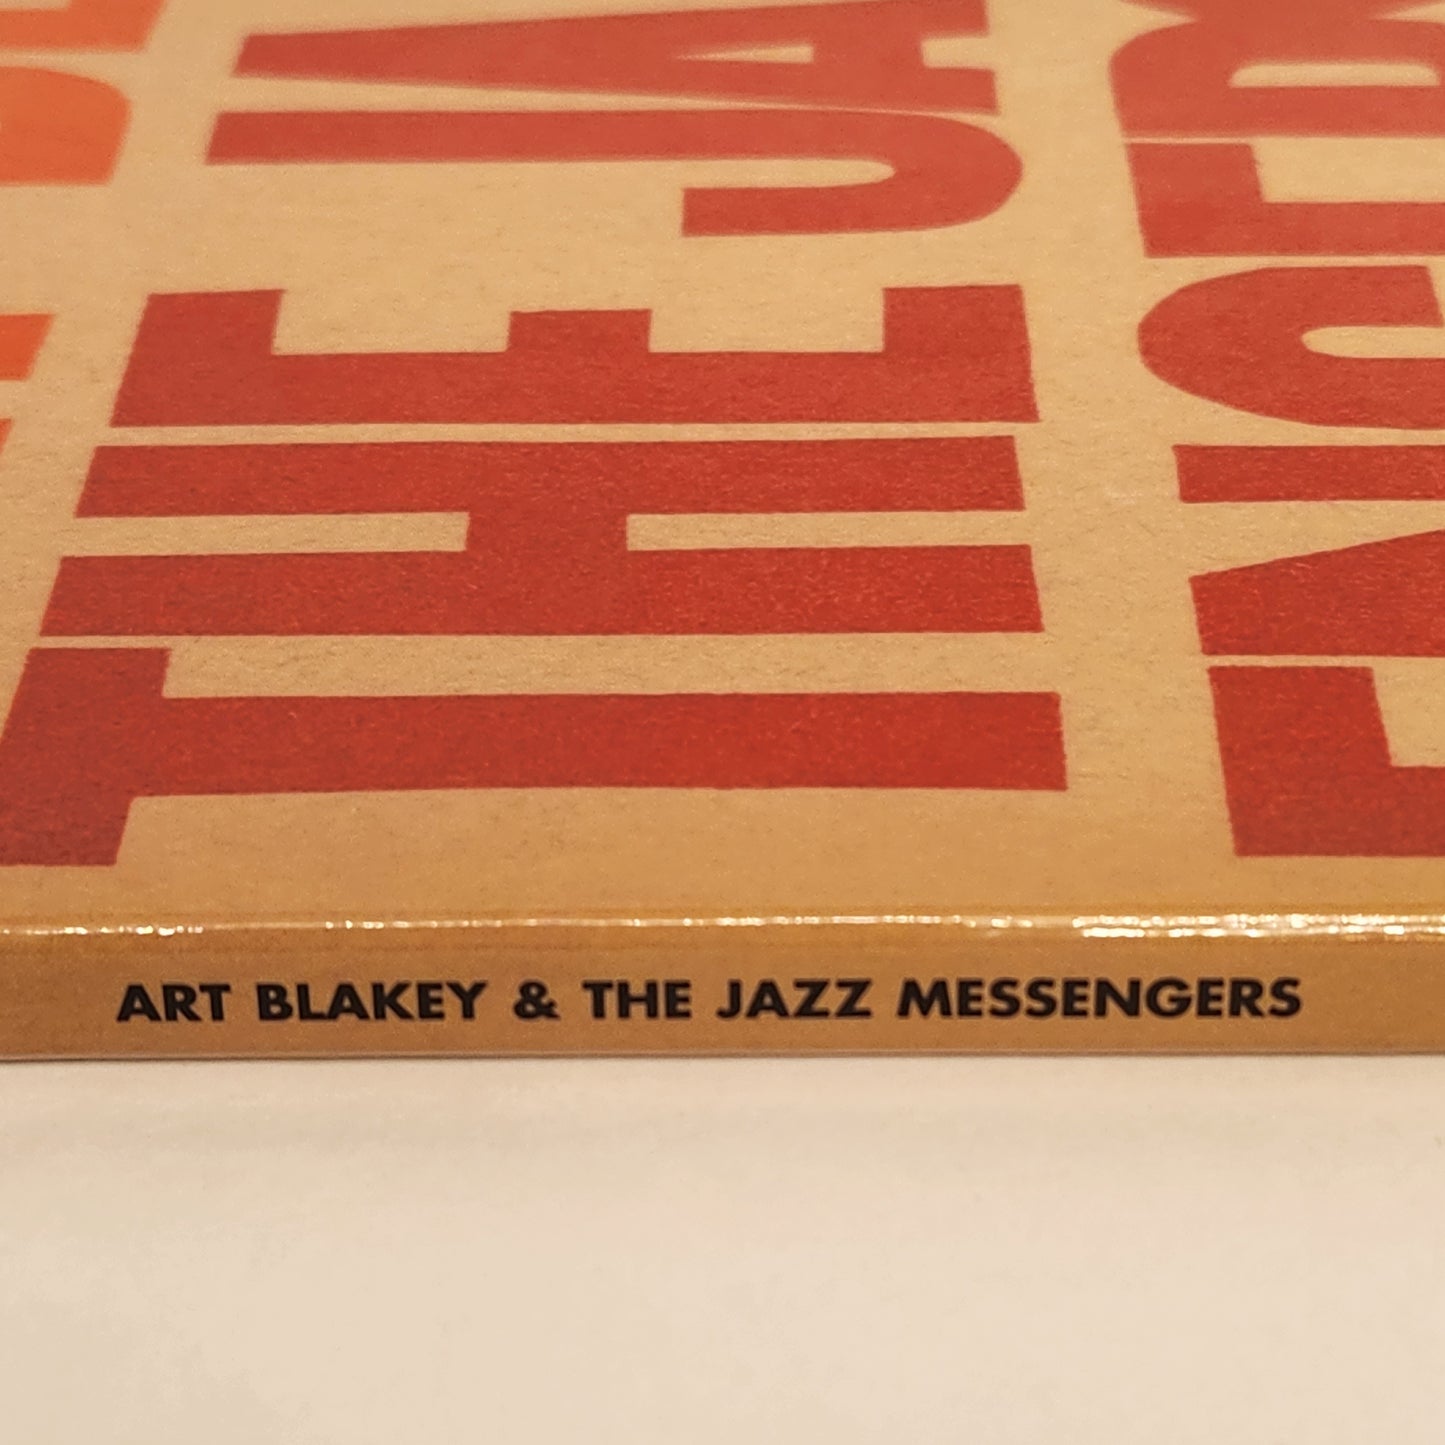 Art Blakey & The Jazz Messengers "A Night In Tunisia" 2008 Limited Edition Reissue 2 LP Jazz Album Blue Note